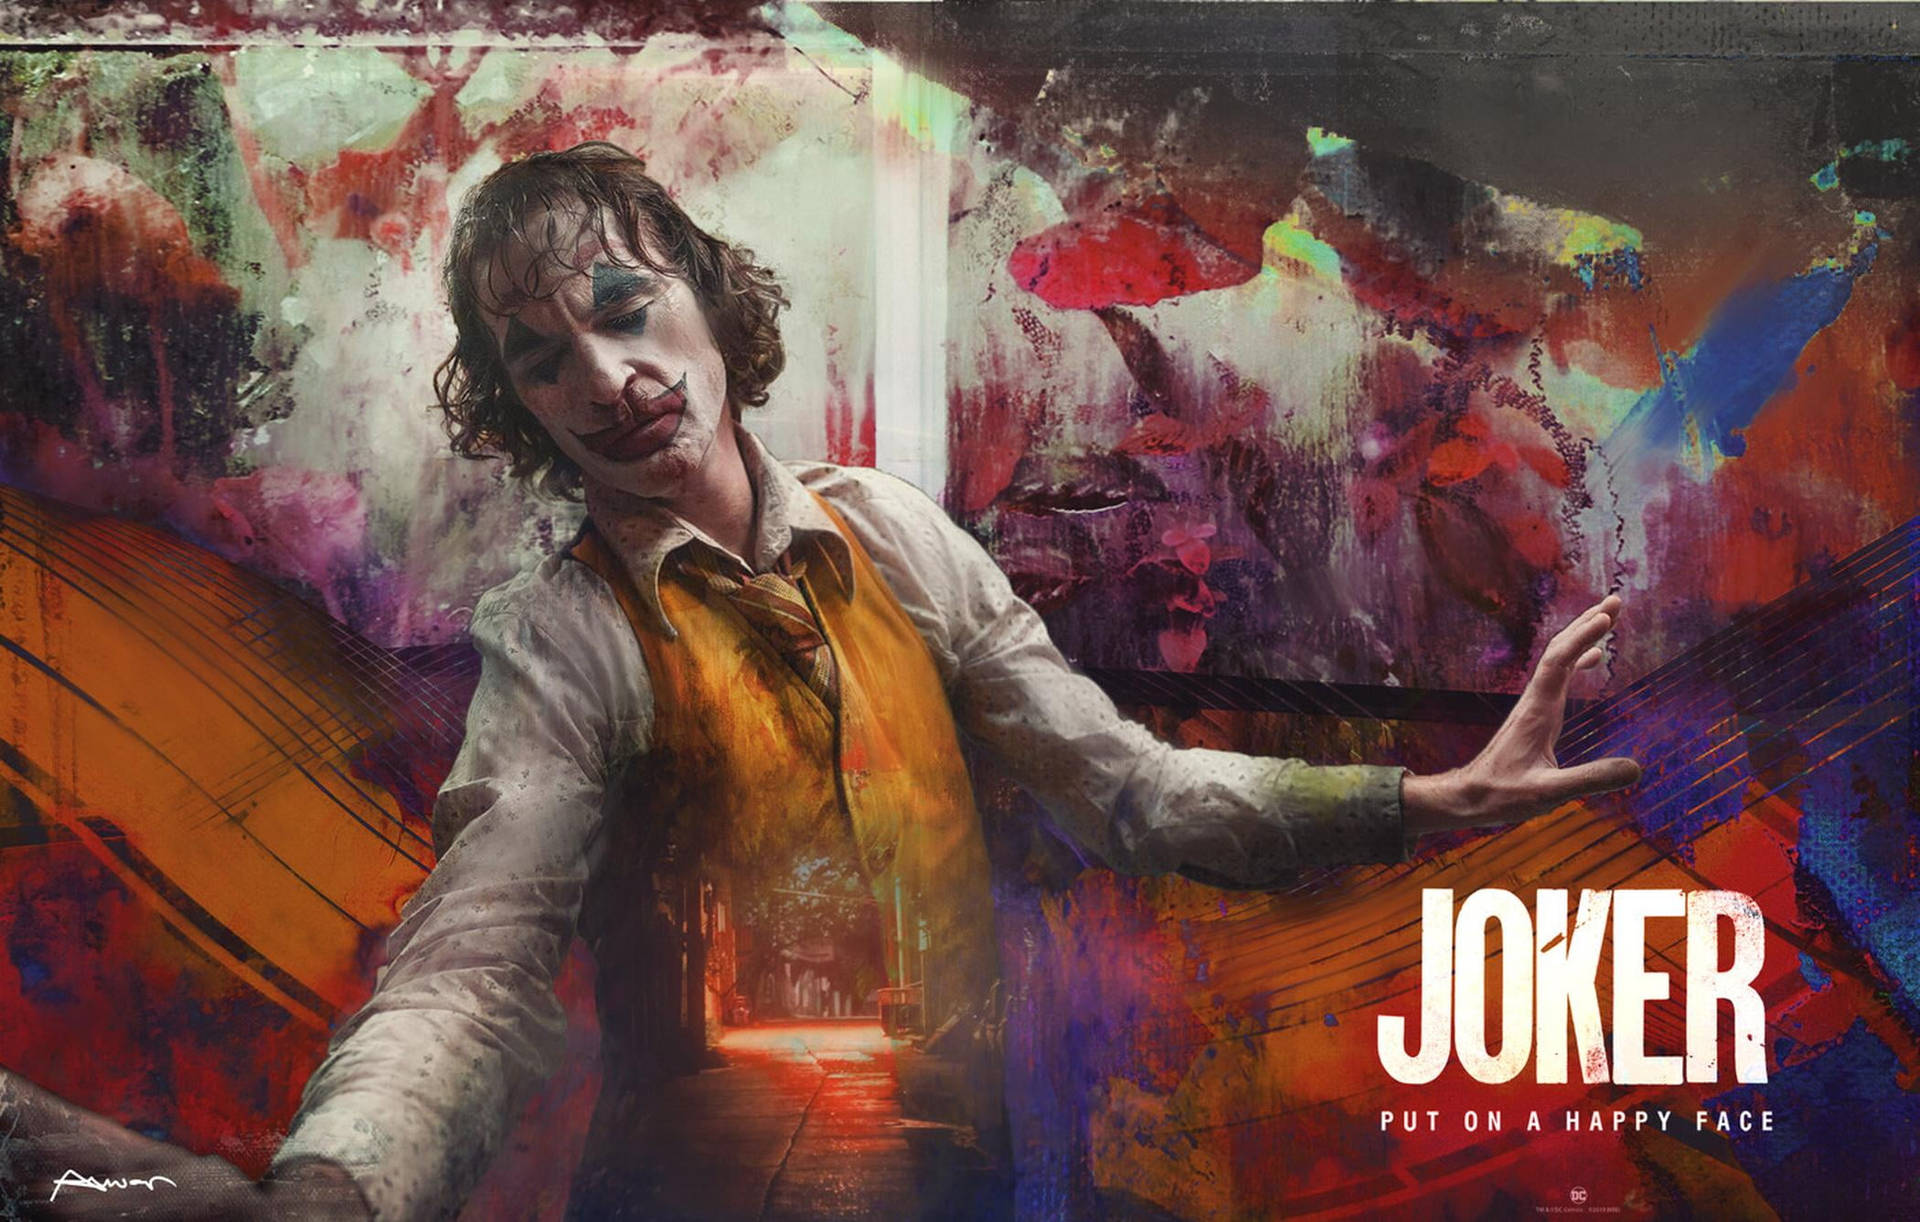 Free Joker Wallpaper Downloads, [500+] Joker Wallpapers for FREE |  